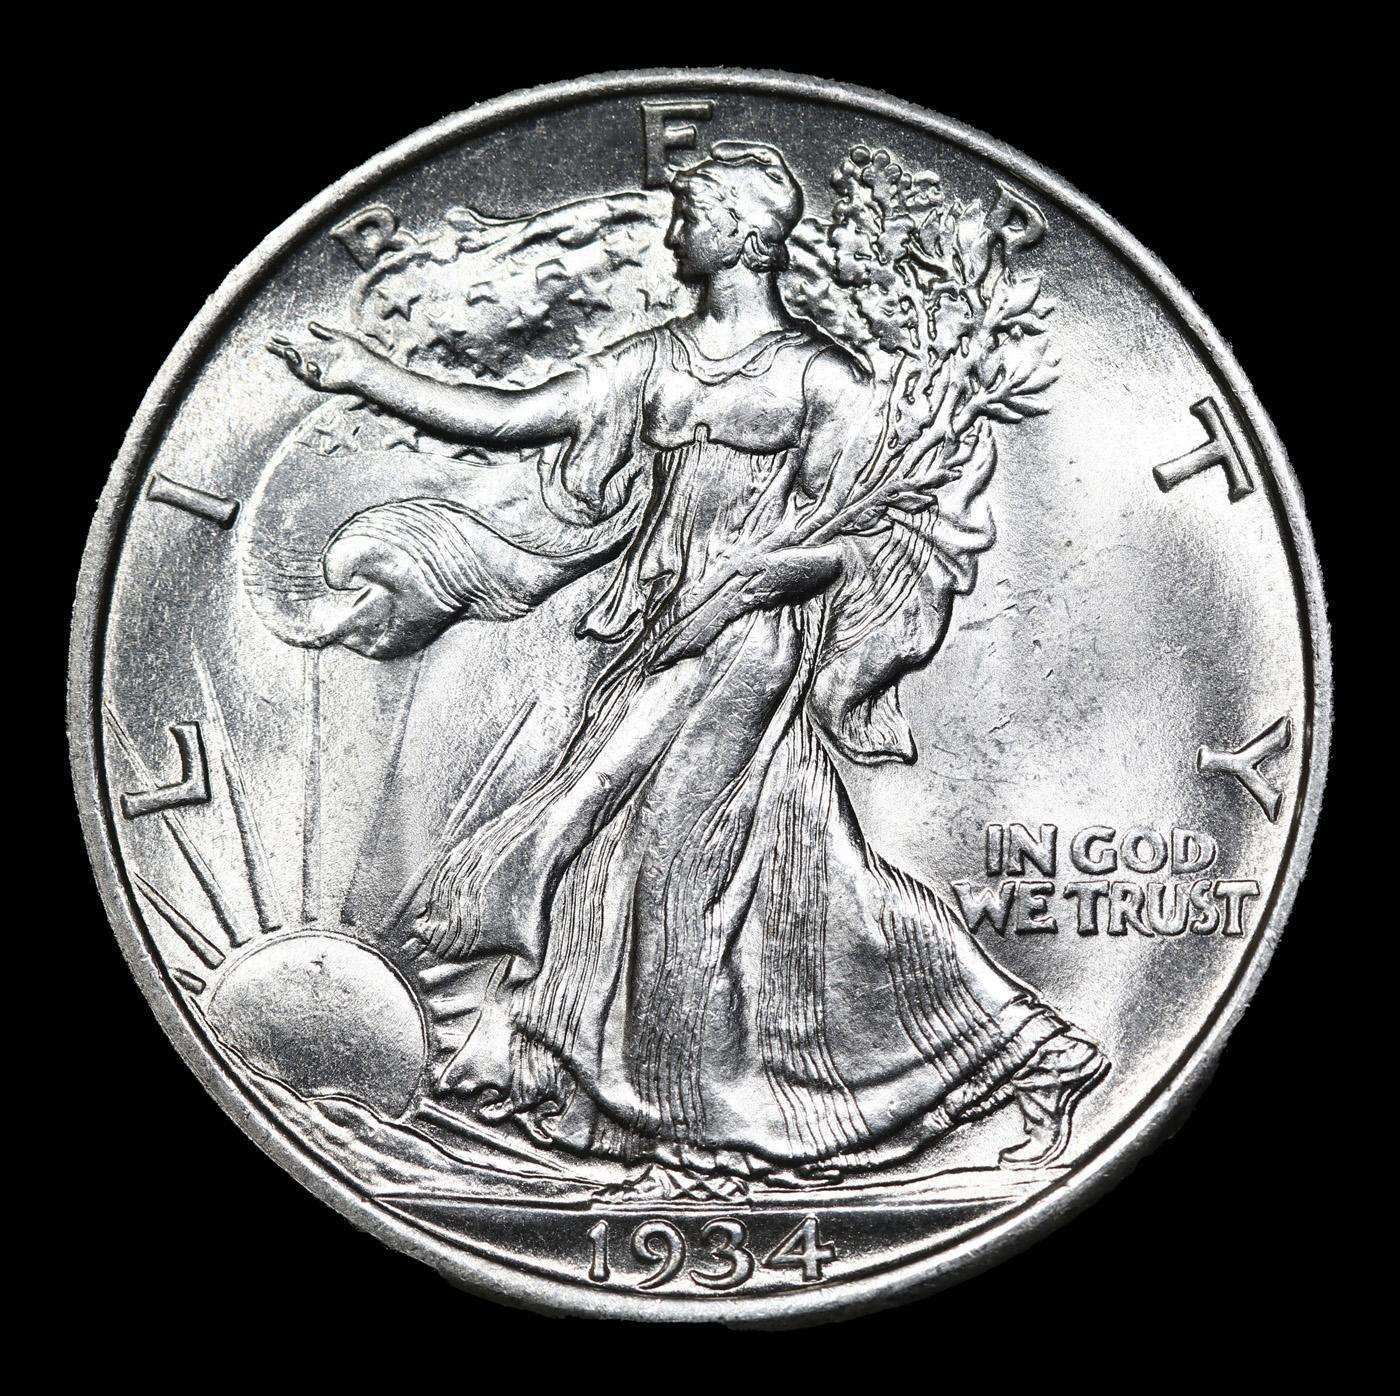 ***Auction Highlight*** 1934-p Walking Liberty Half Dollar Near Top Pop! 50c Graded ms67 By SEGS (fc